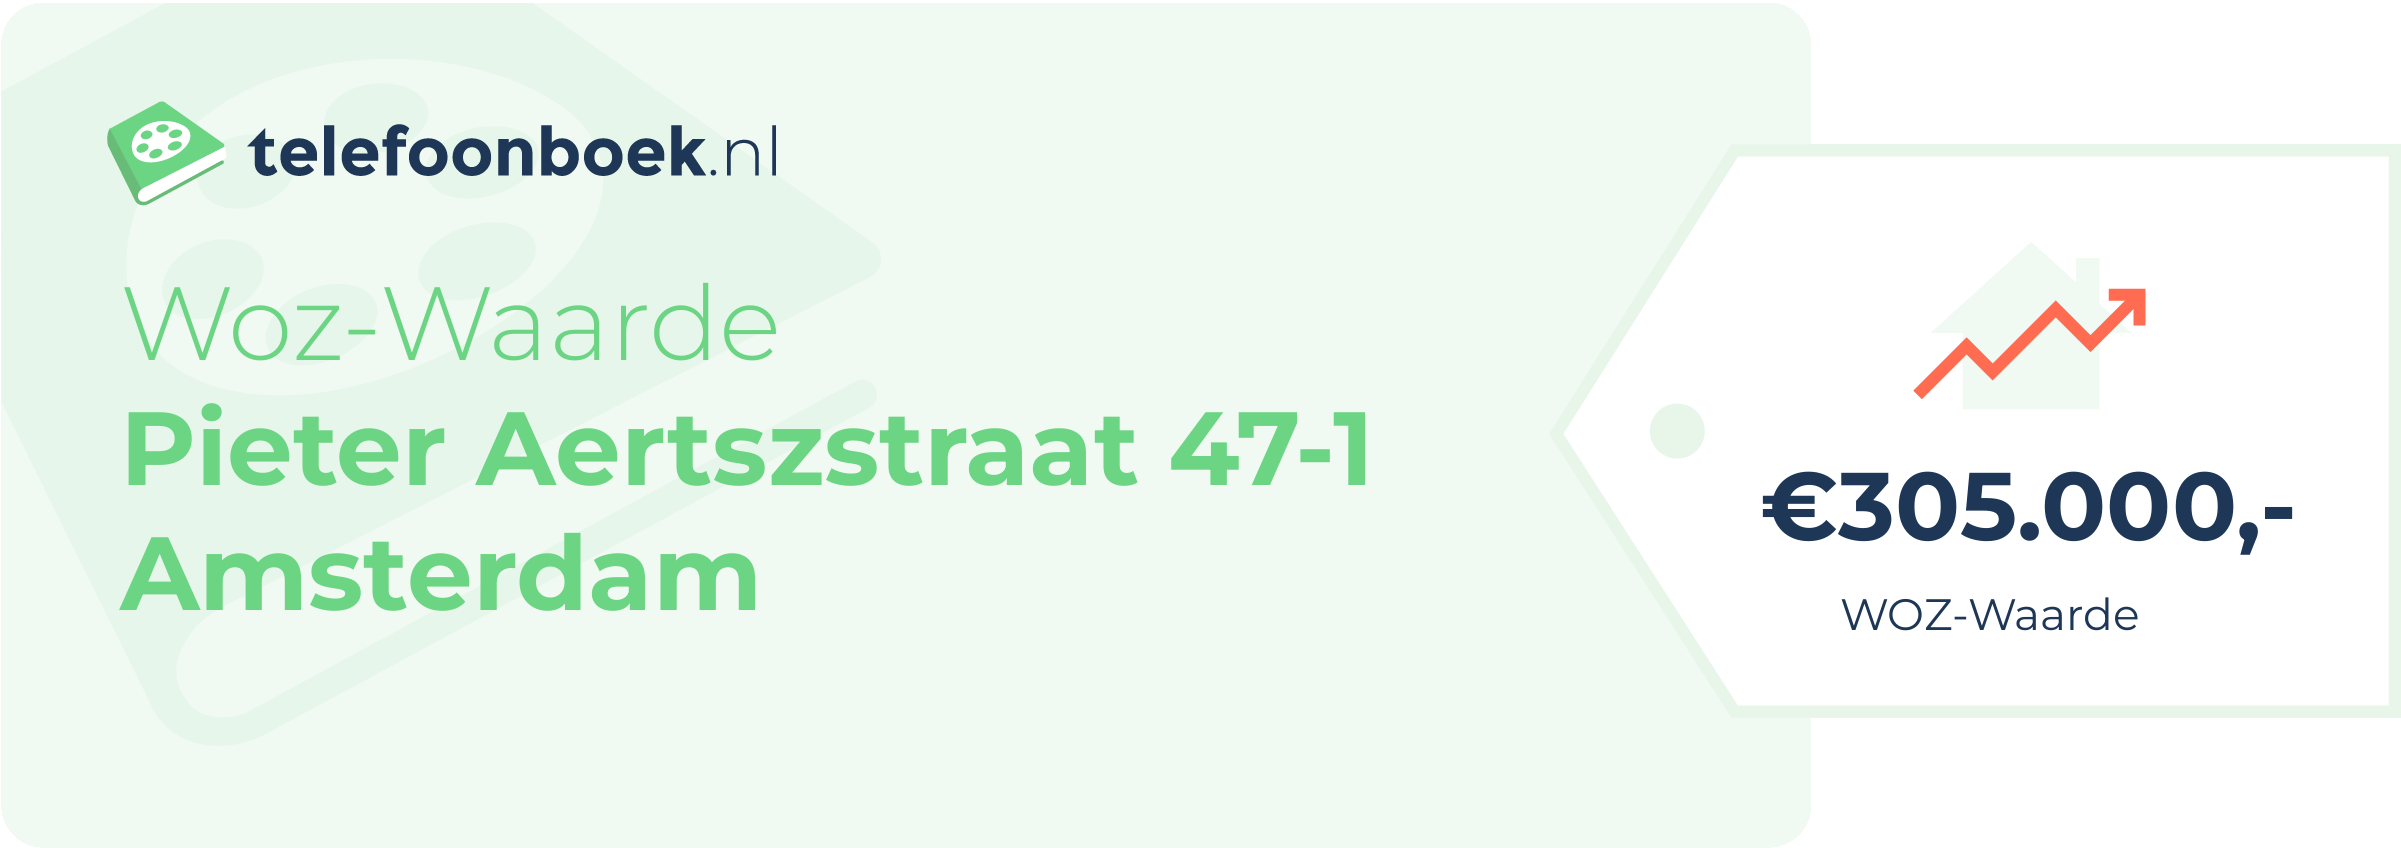 WOZ-waarde Pieter Aertszstraat 47-1 Amsterdam